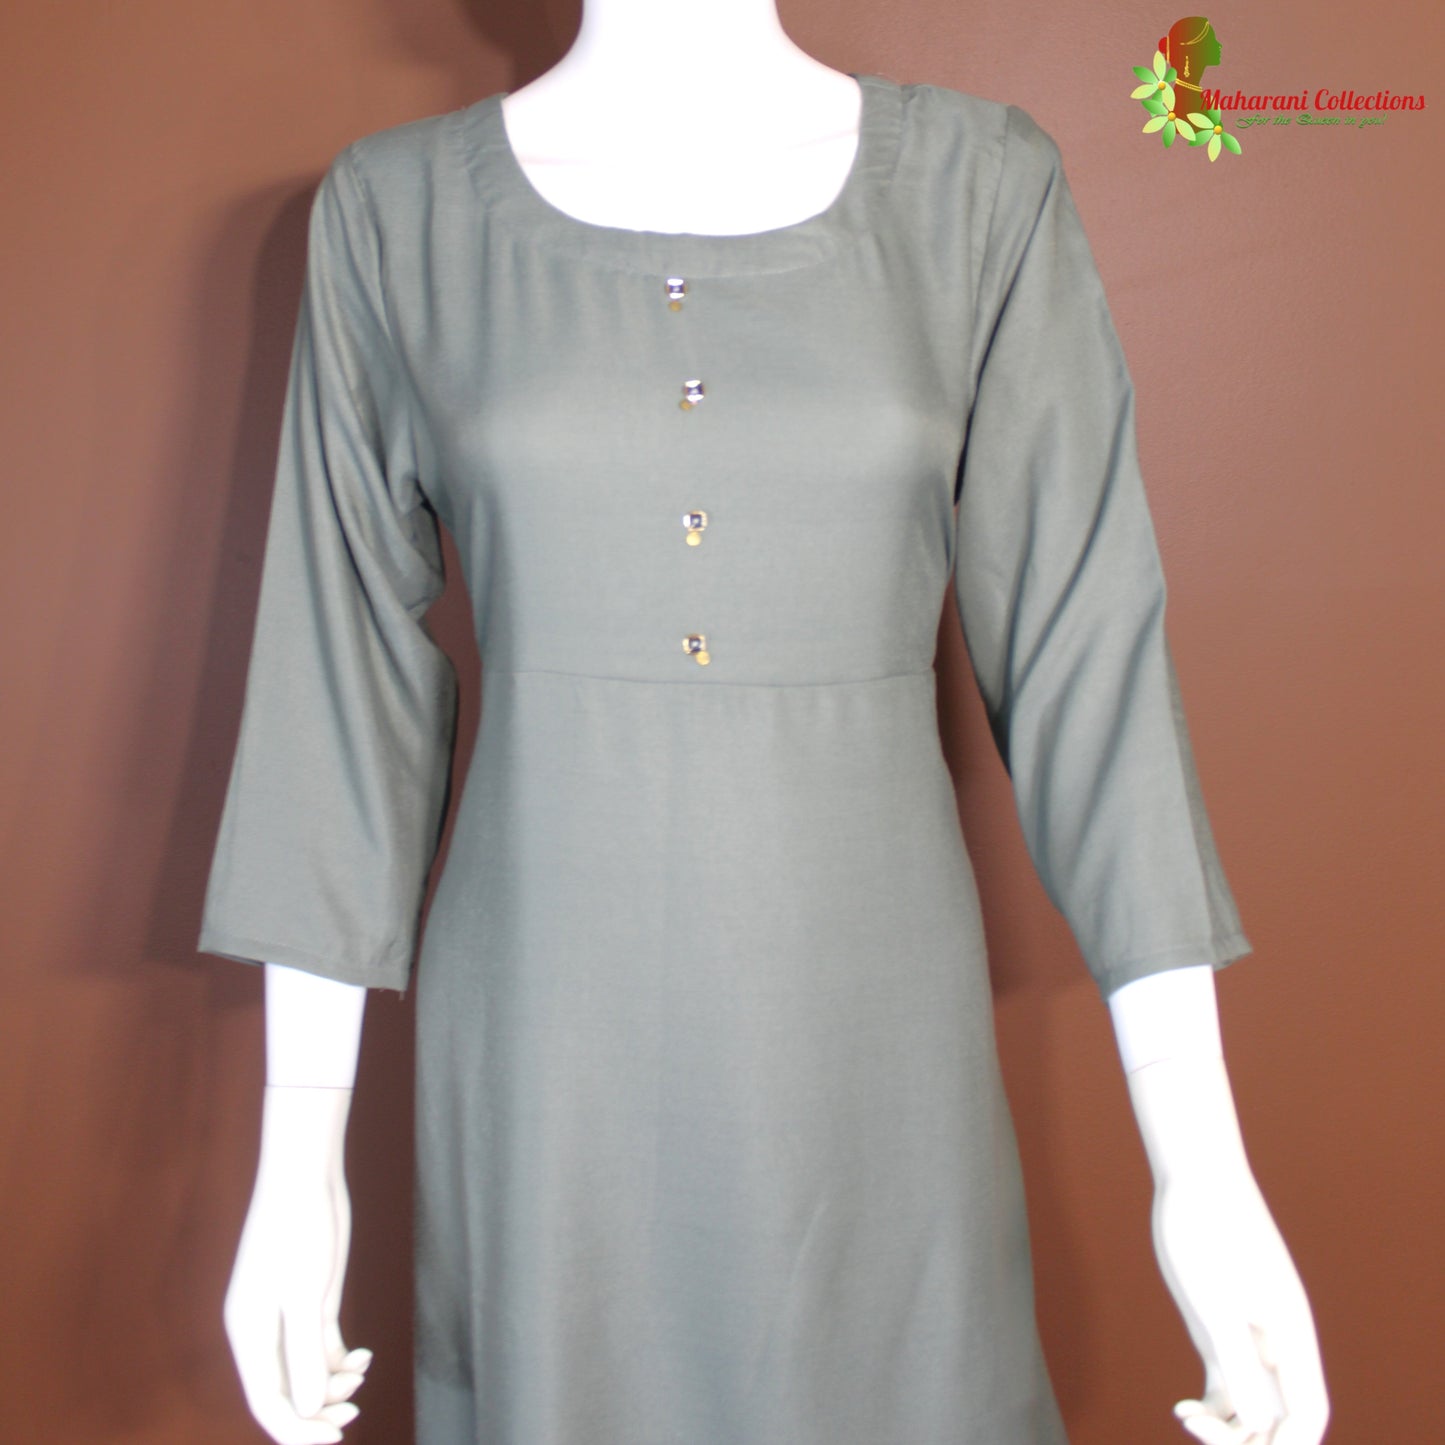 Maharani's Long Dress - Soft Cotton - Teal (L)